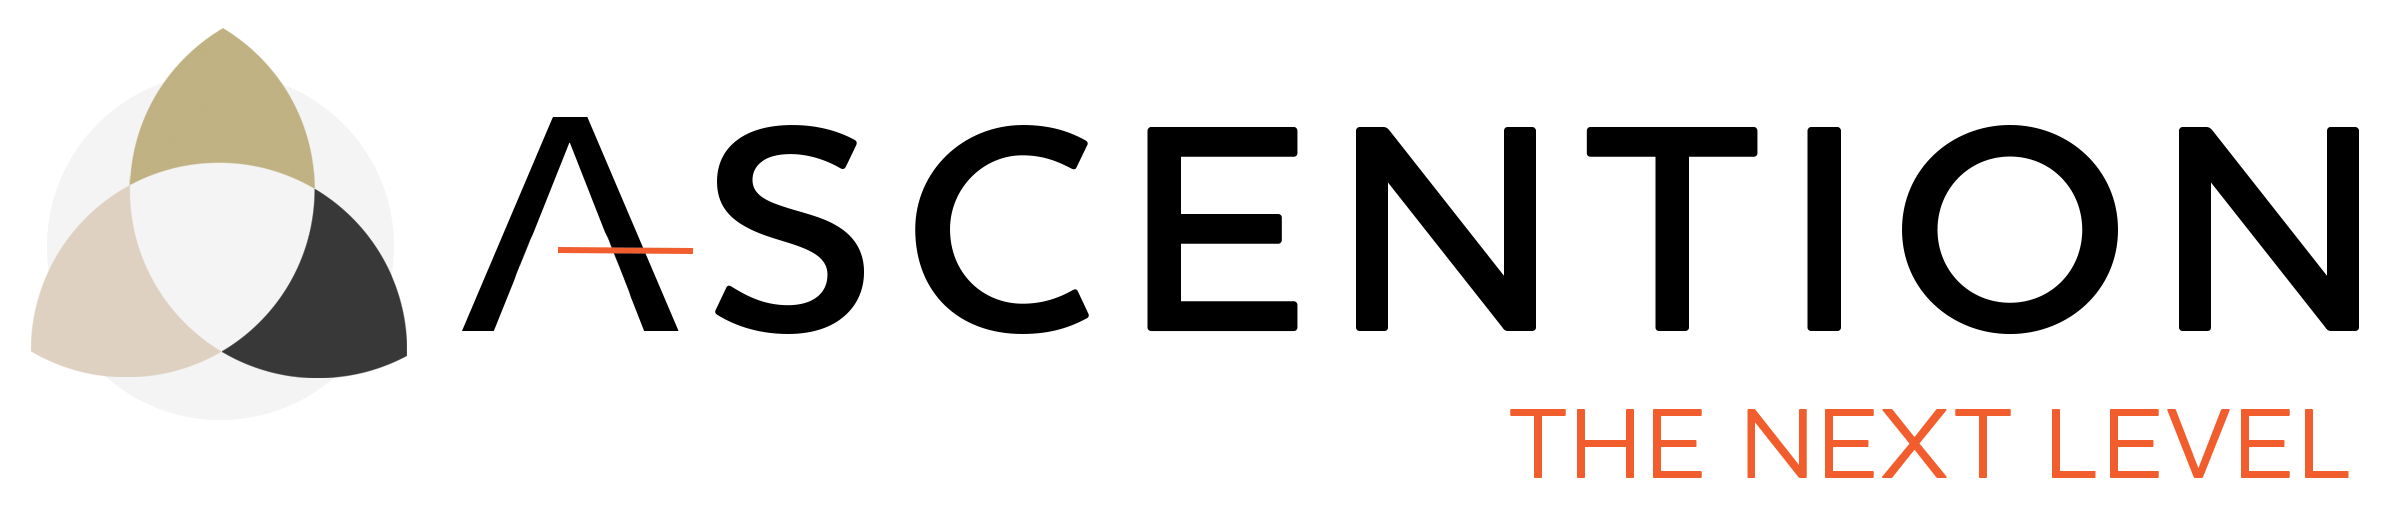 Ascention-Logo